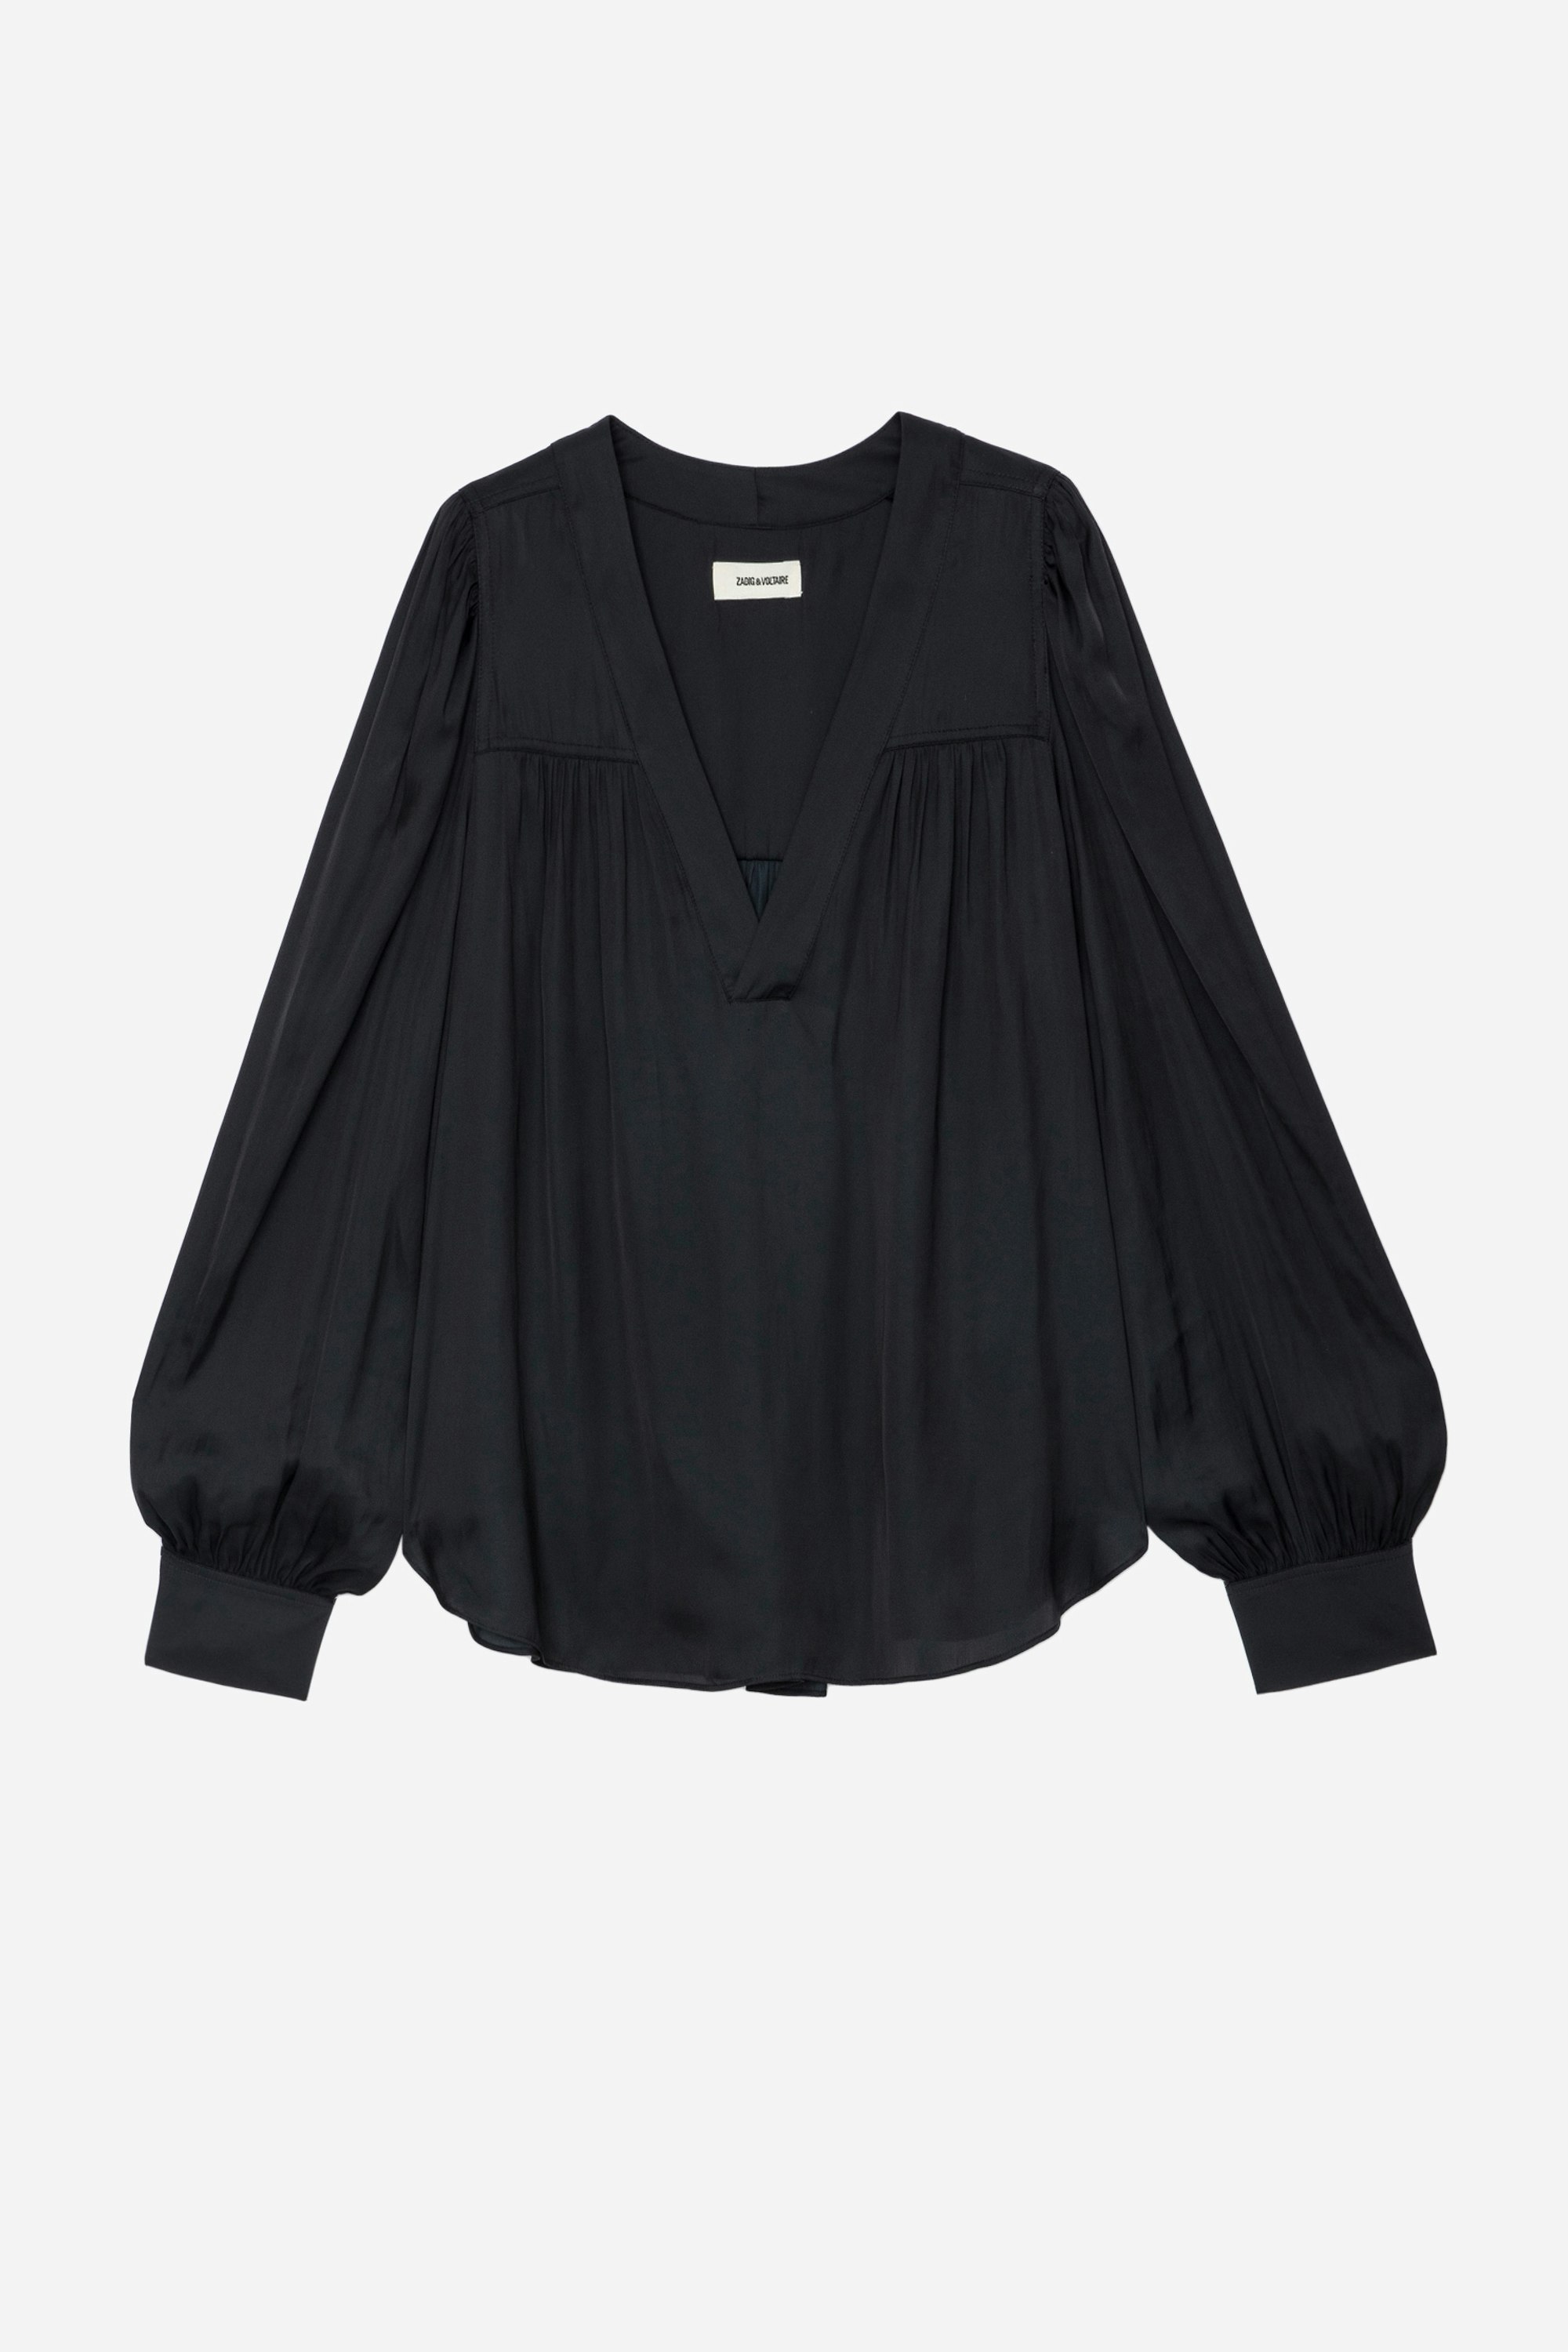 Telia Blouse - Women’s black satin long-sleeve blouse